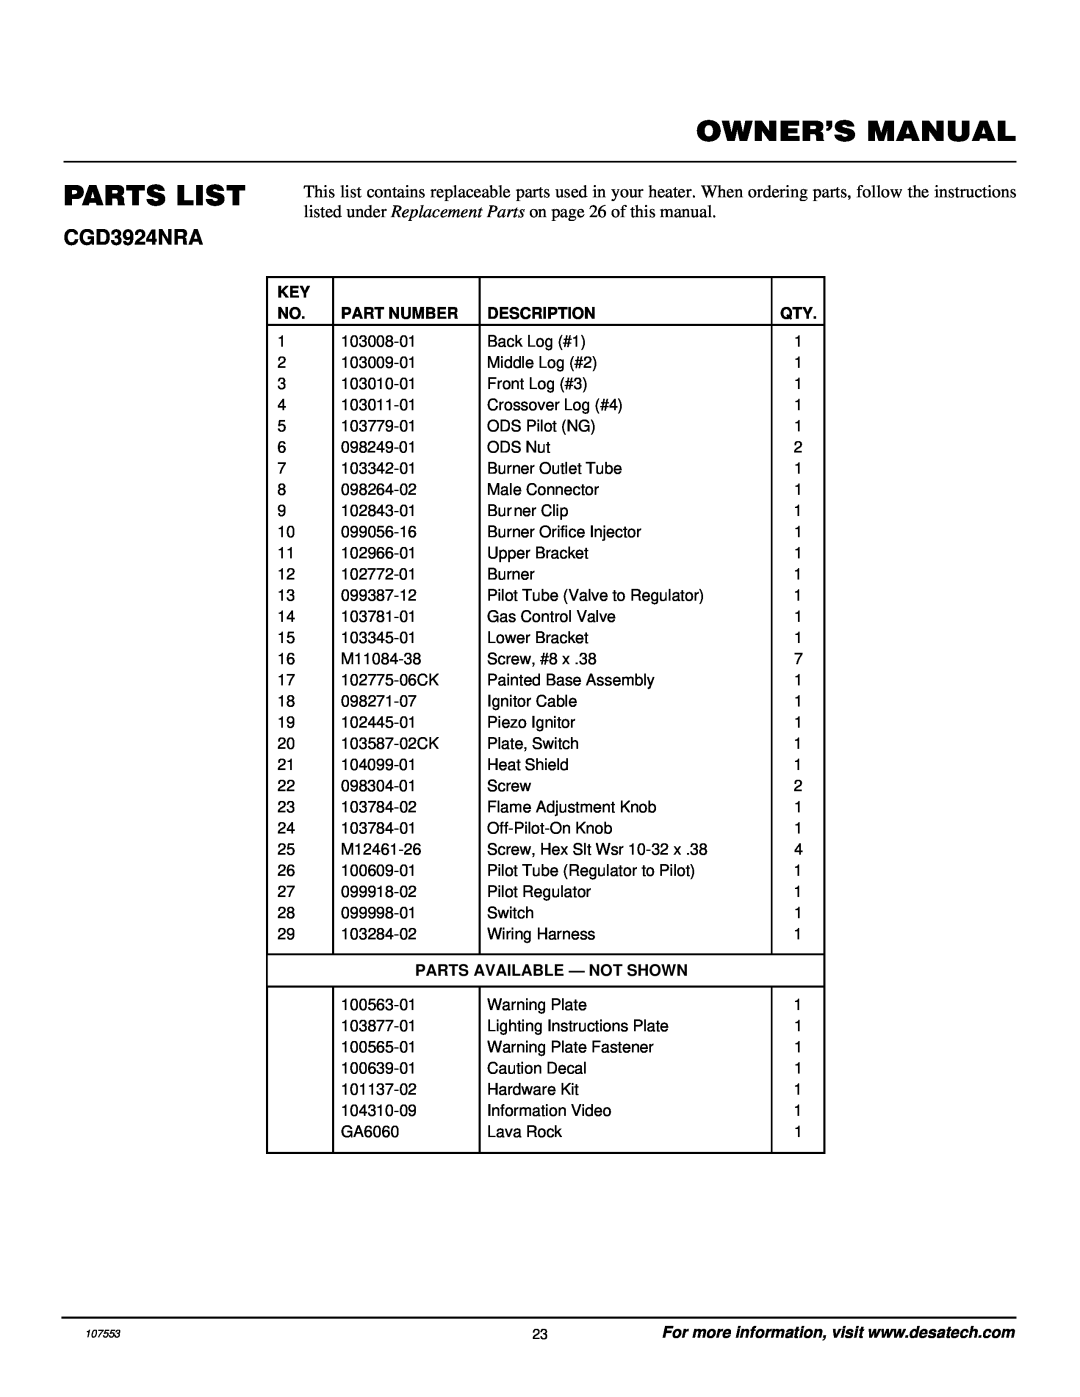 Desa CCL3924NR, CCL3930NR installation manual Parts List, CGD3924NRA, Part Number, Description, Parts Available - Not Shown 